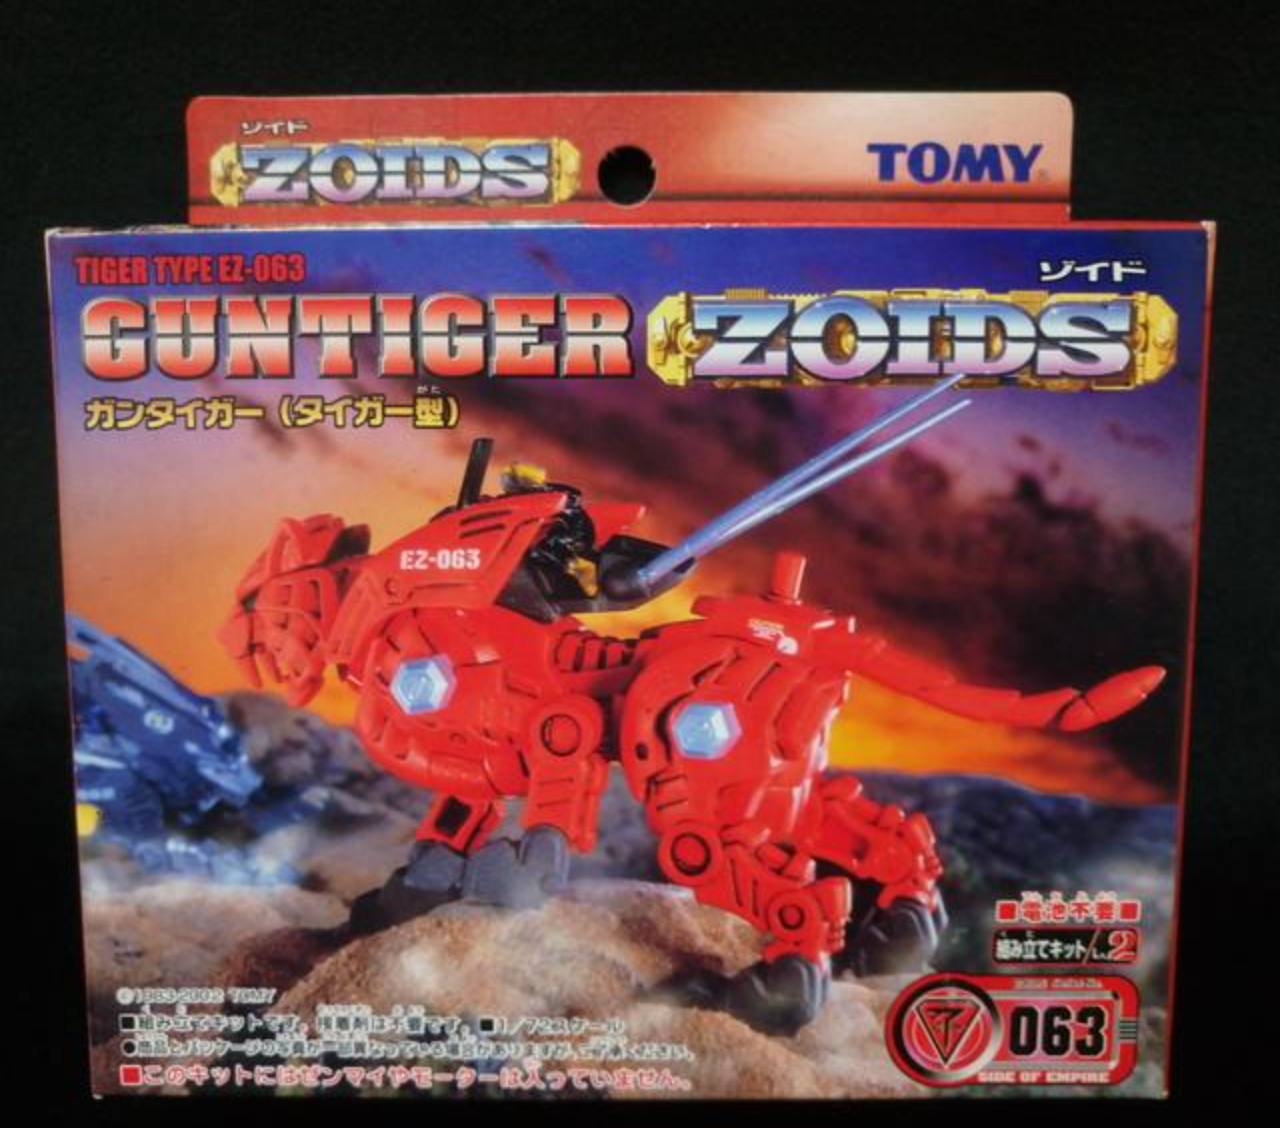 Tomy Zoids 1/72 EZ-063 Guntiger Tiger Type Plastic Model Kit Action Figure